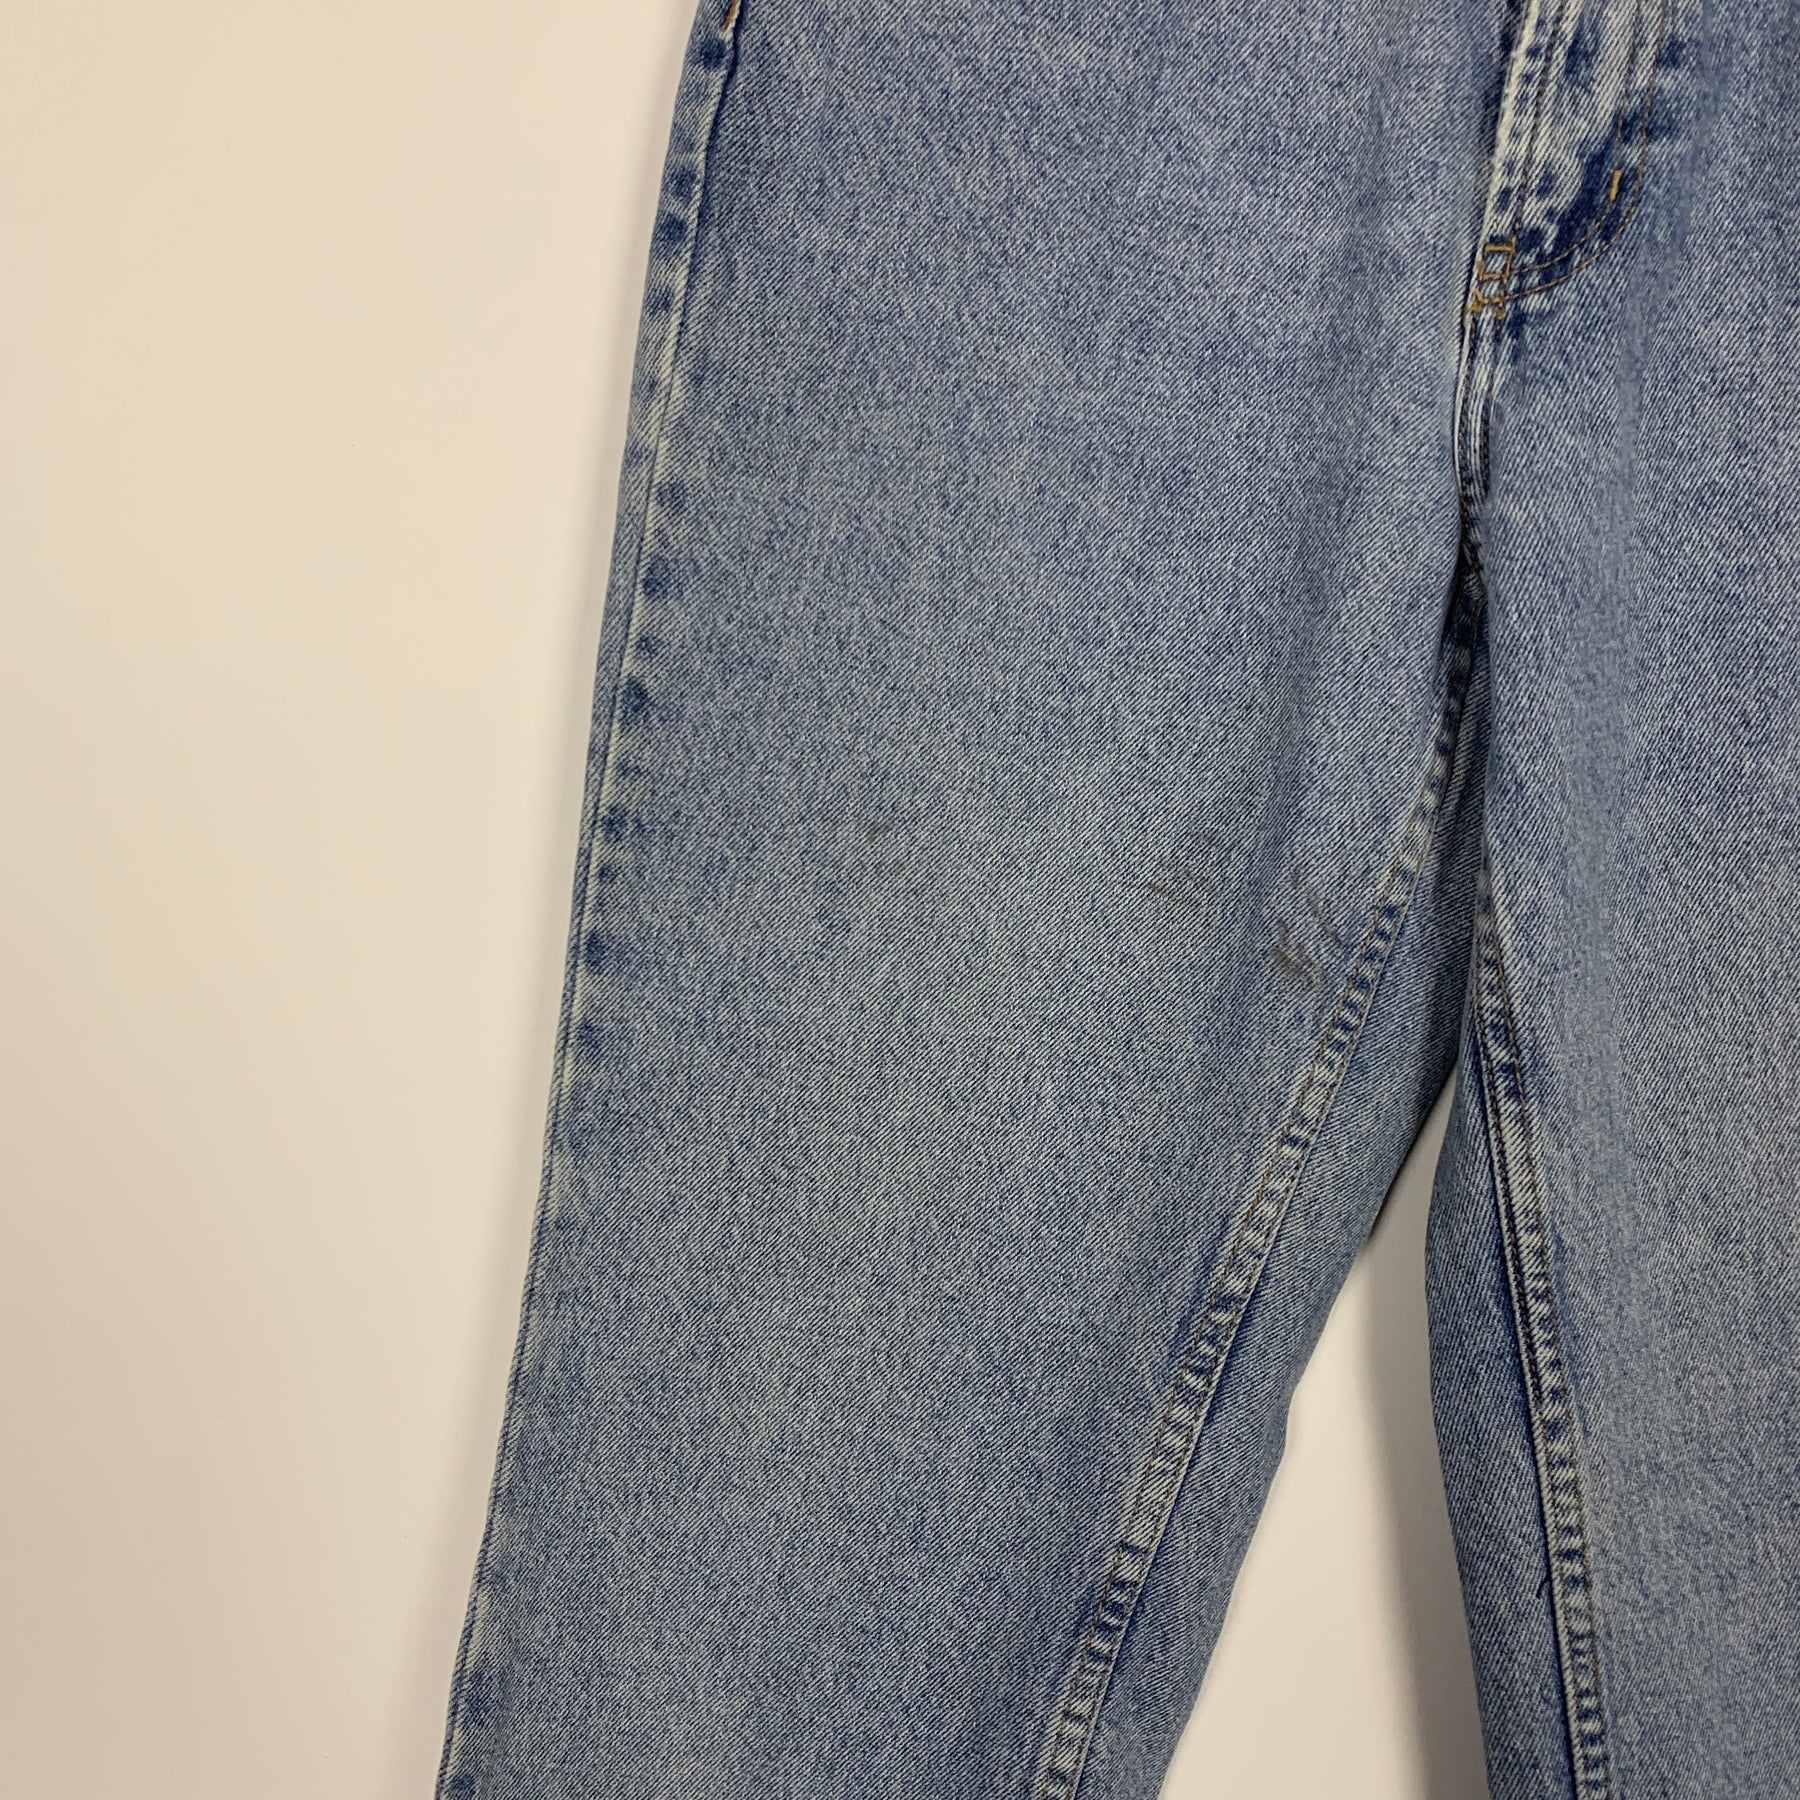 Vintage Tommy Hilfiger Jeans - Women's 26/32